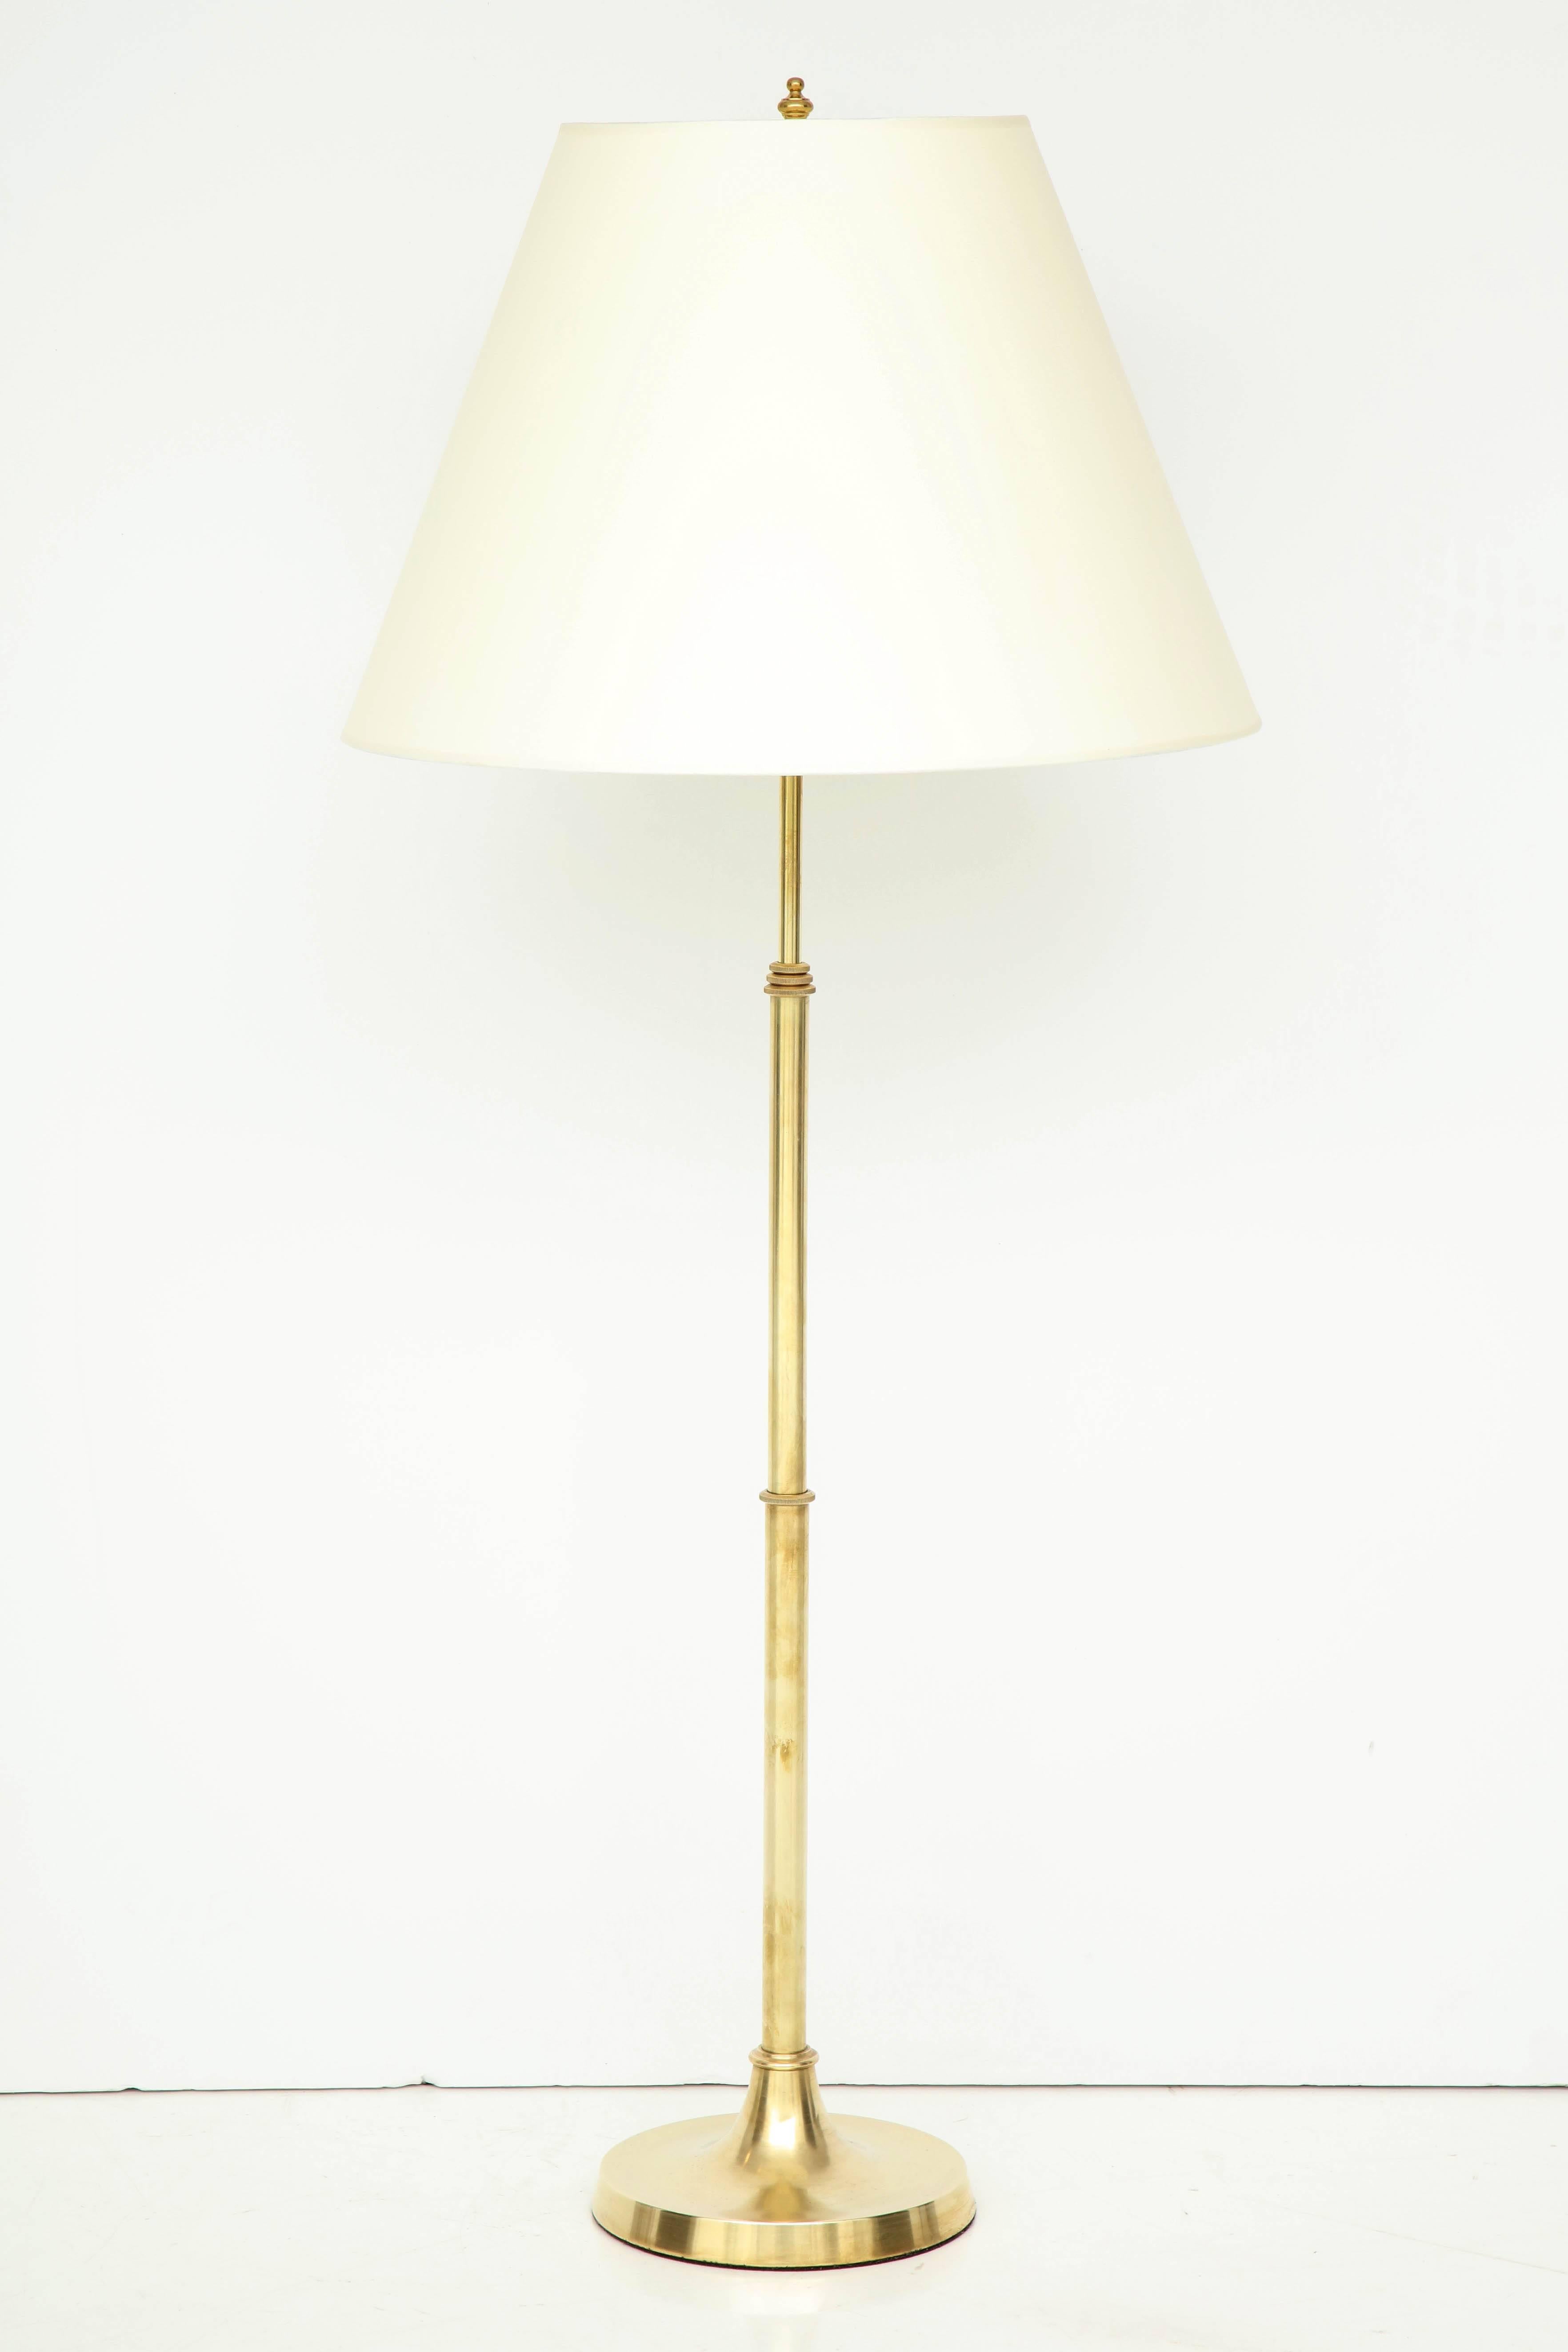 Danish Telescopic Brass Table or Floor Lamp, circa 1940s For Sale 3